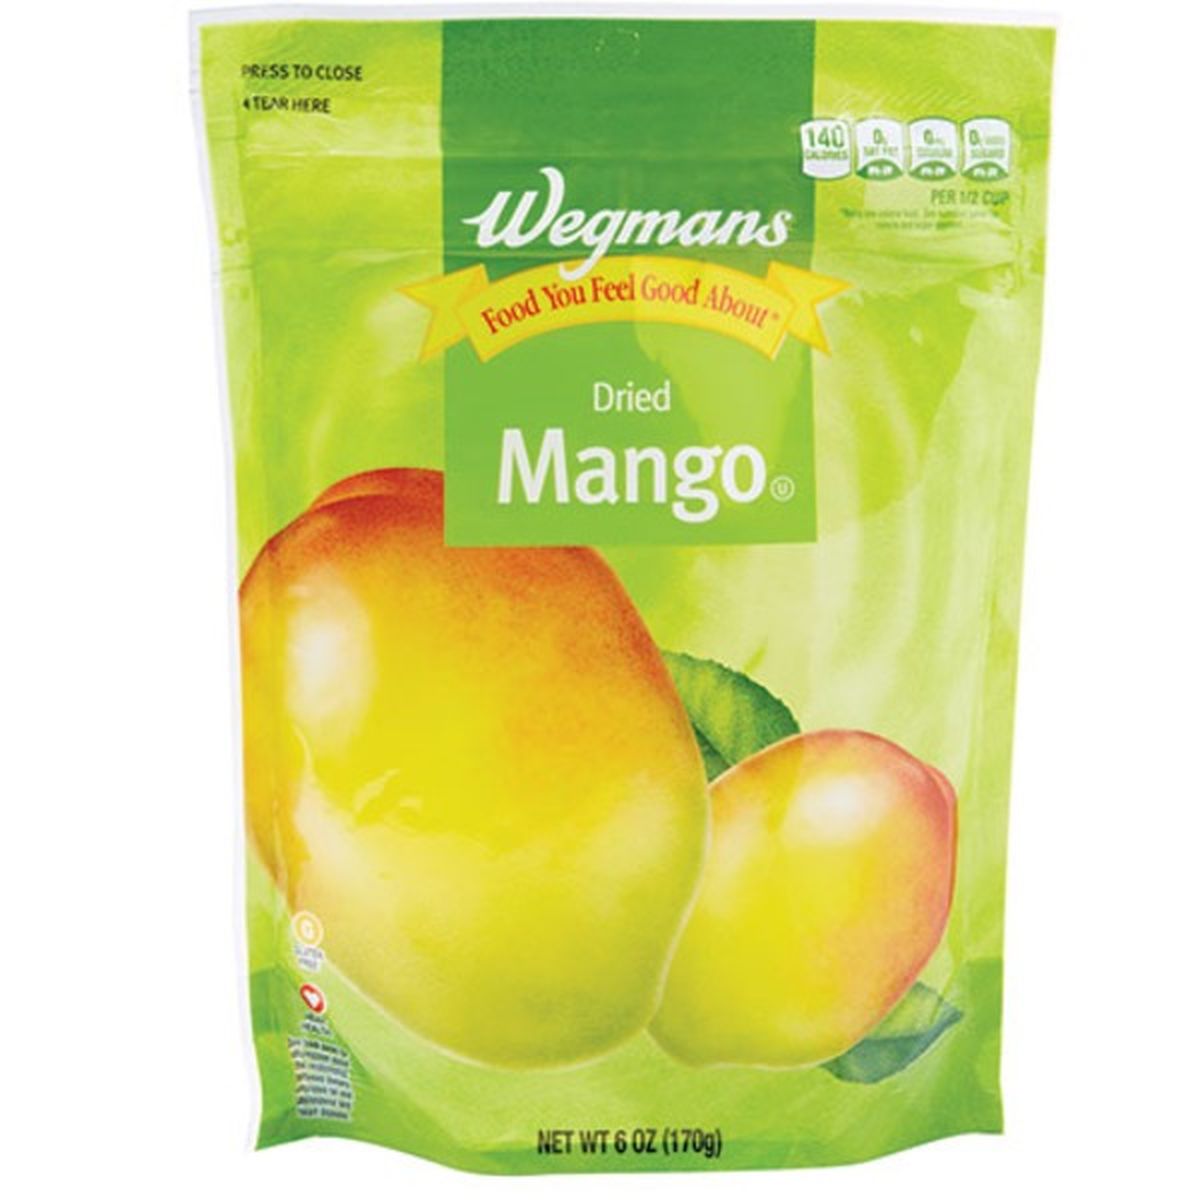 Calories in Wegmans Dried Mango